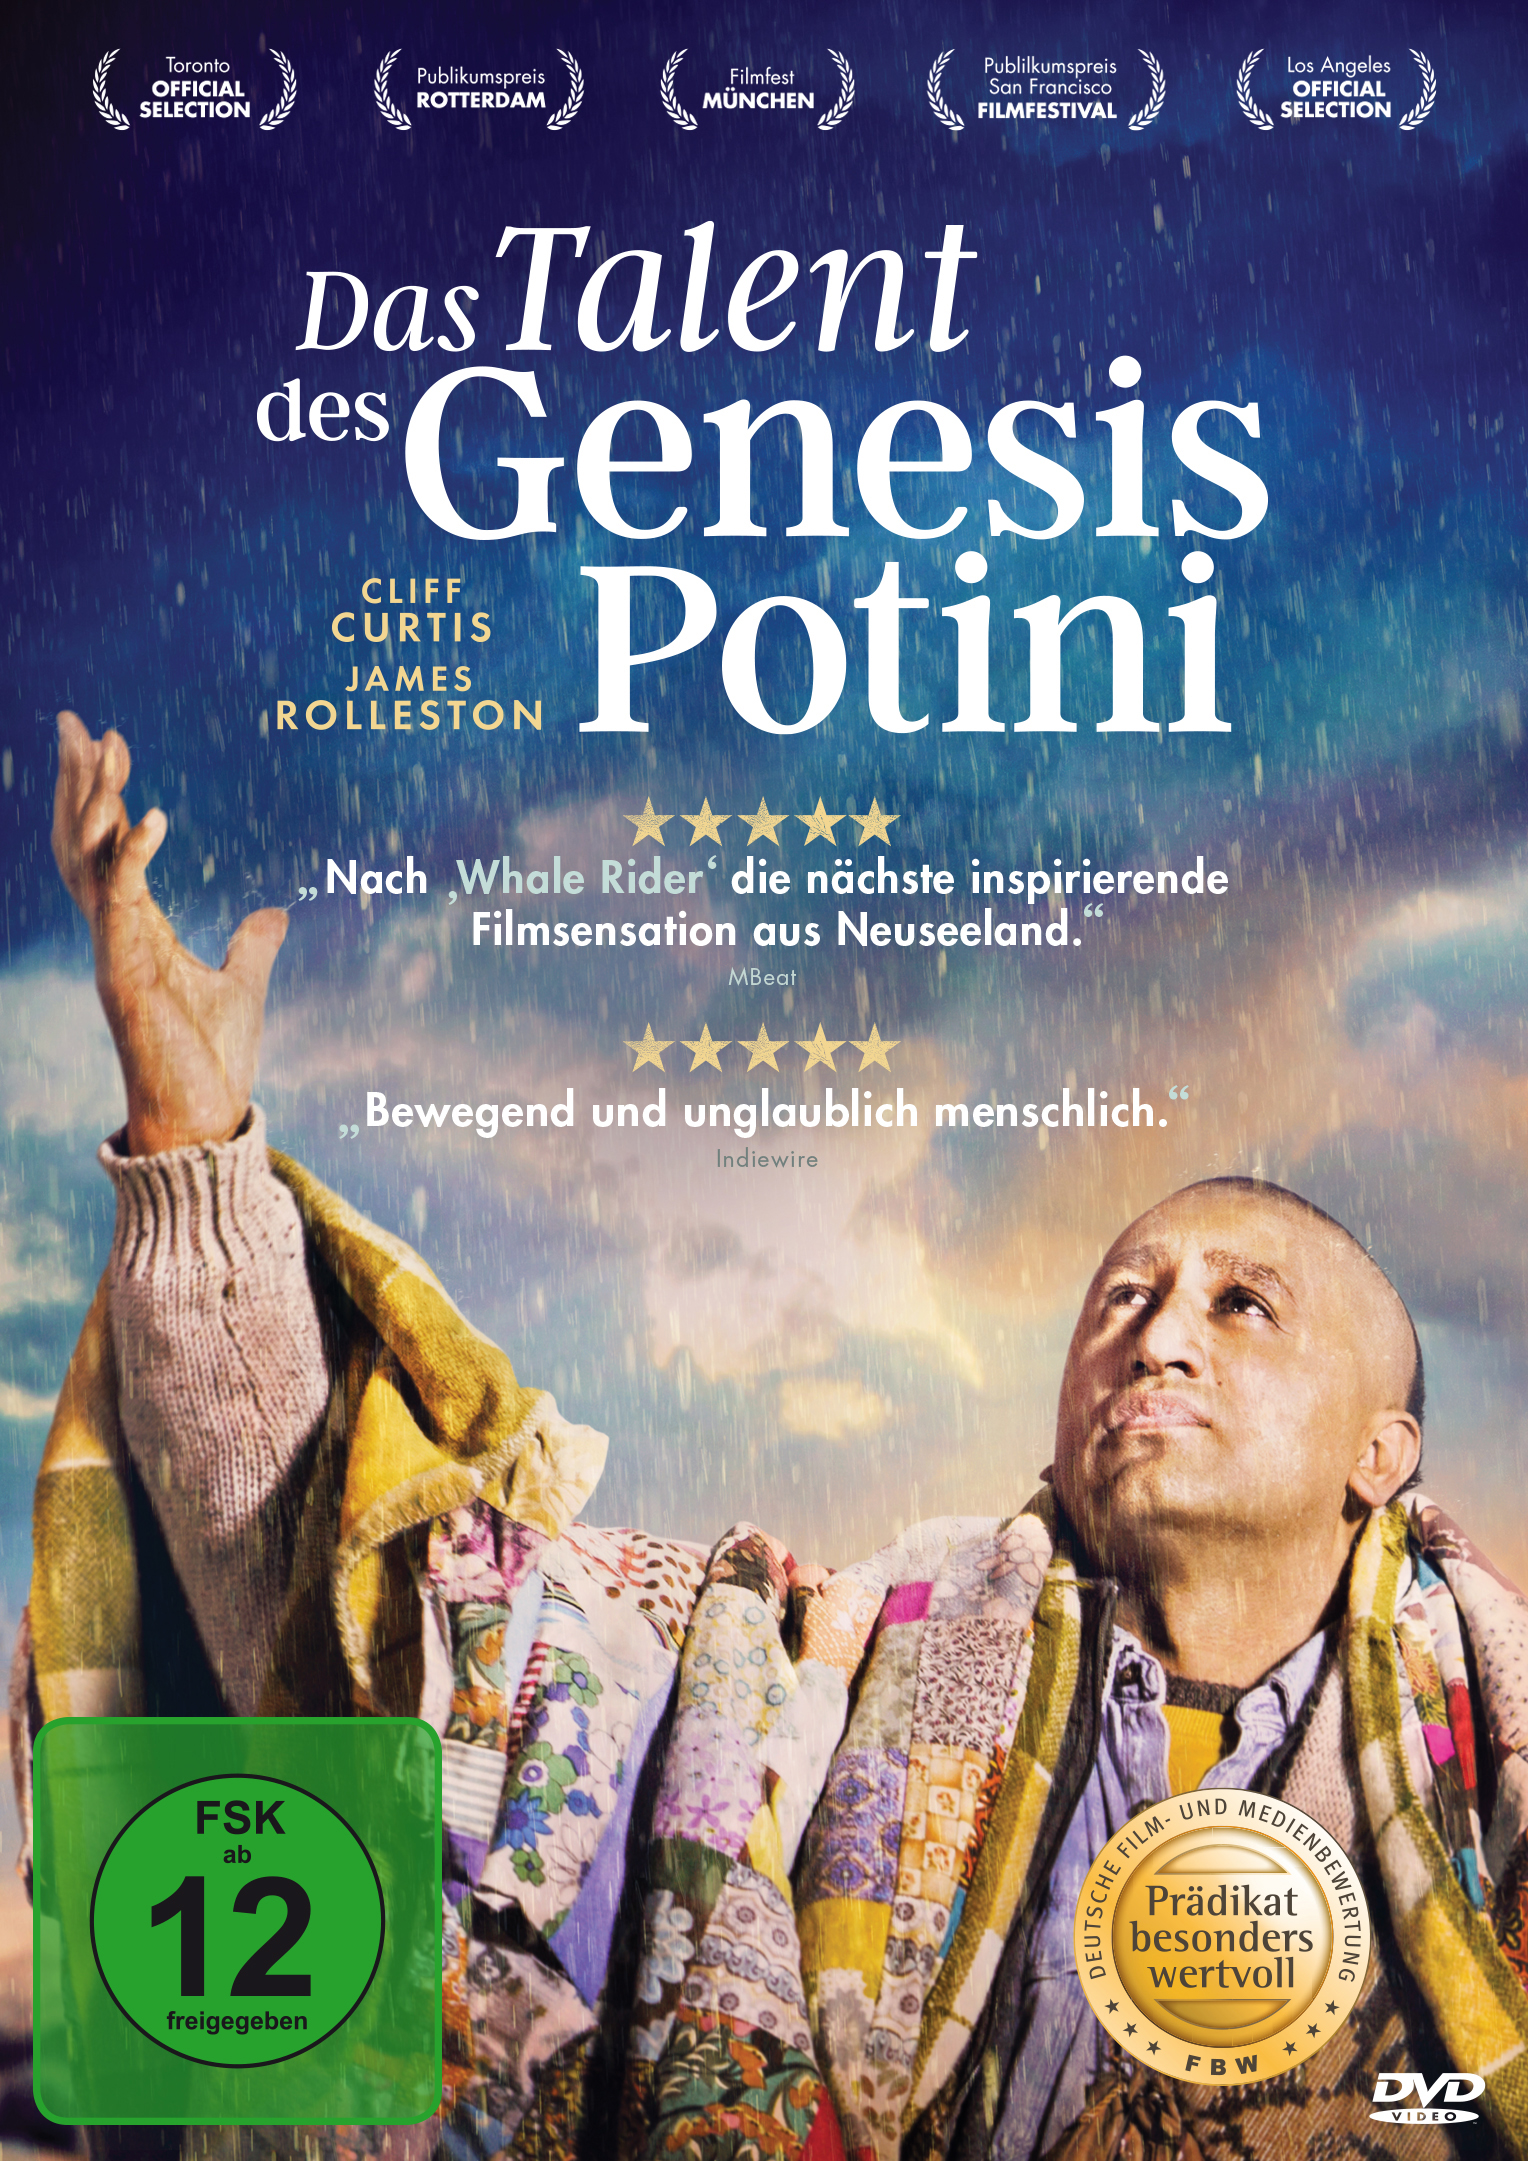 Genesis Potini des Das Talent DVD